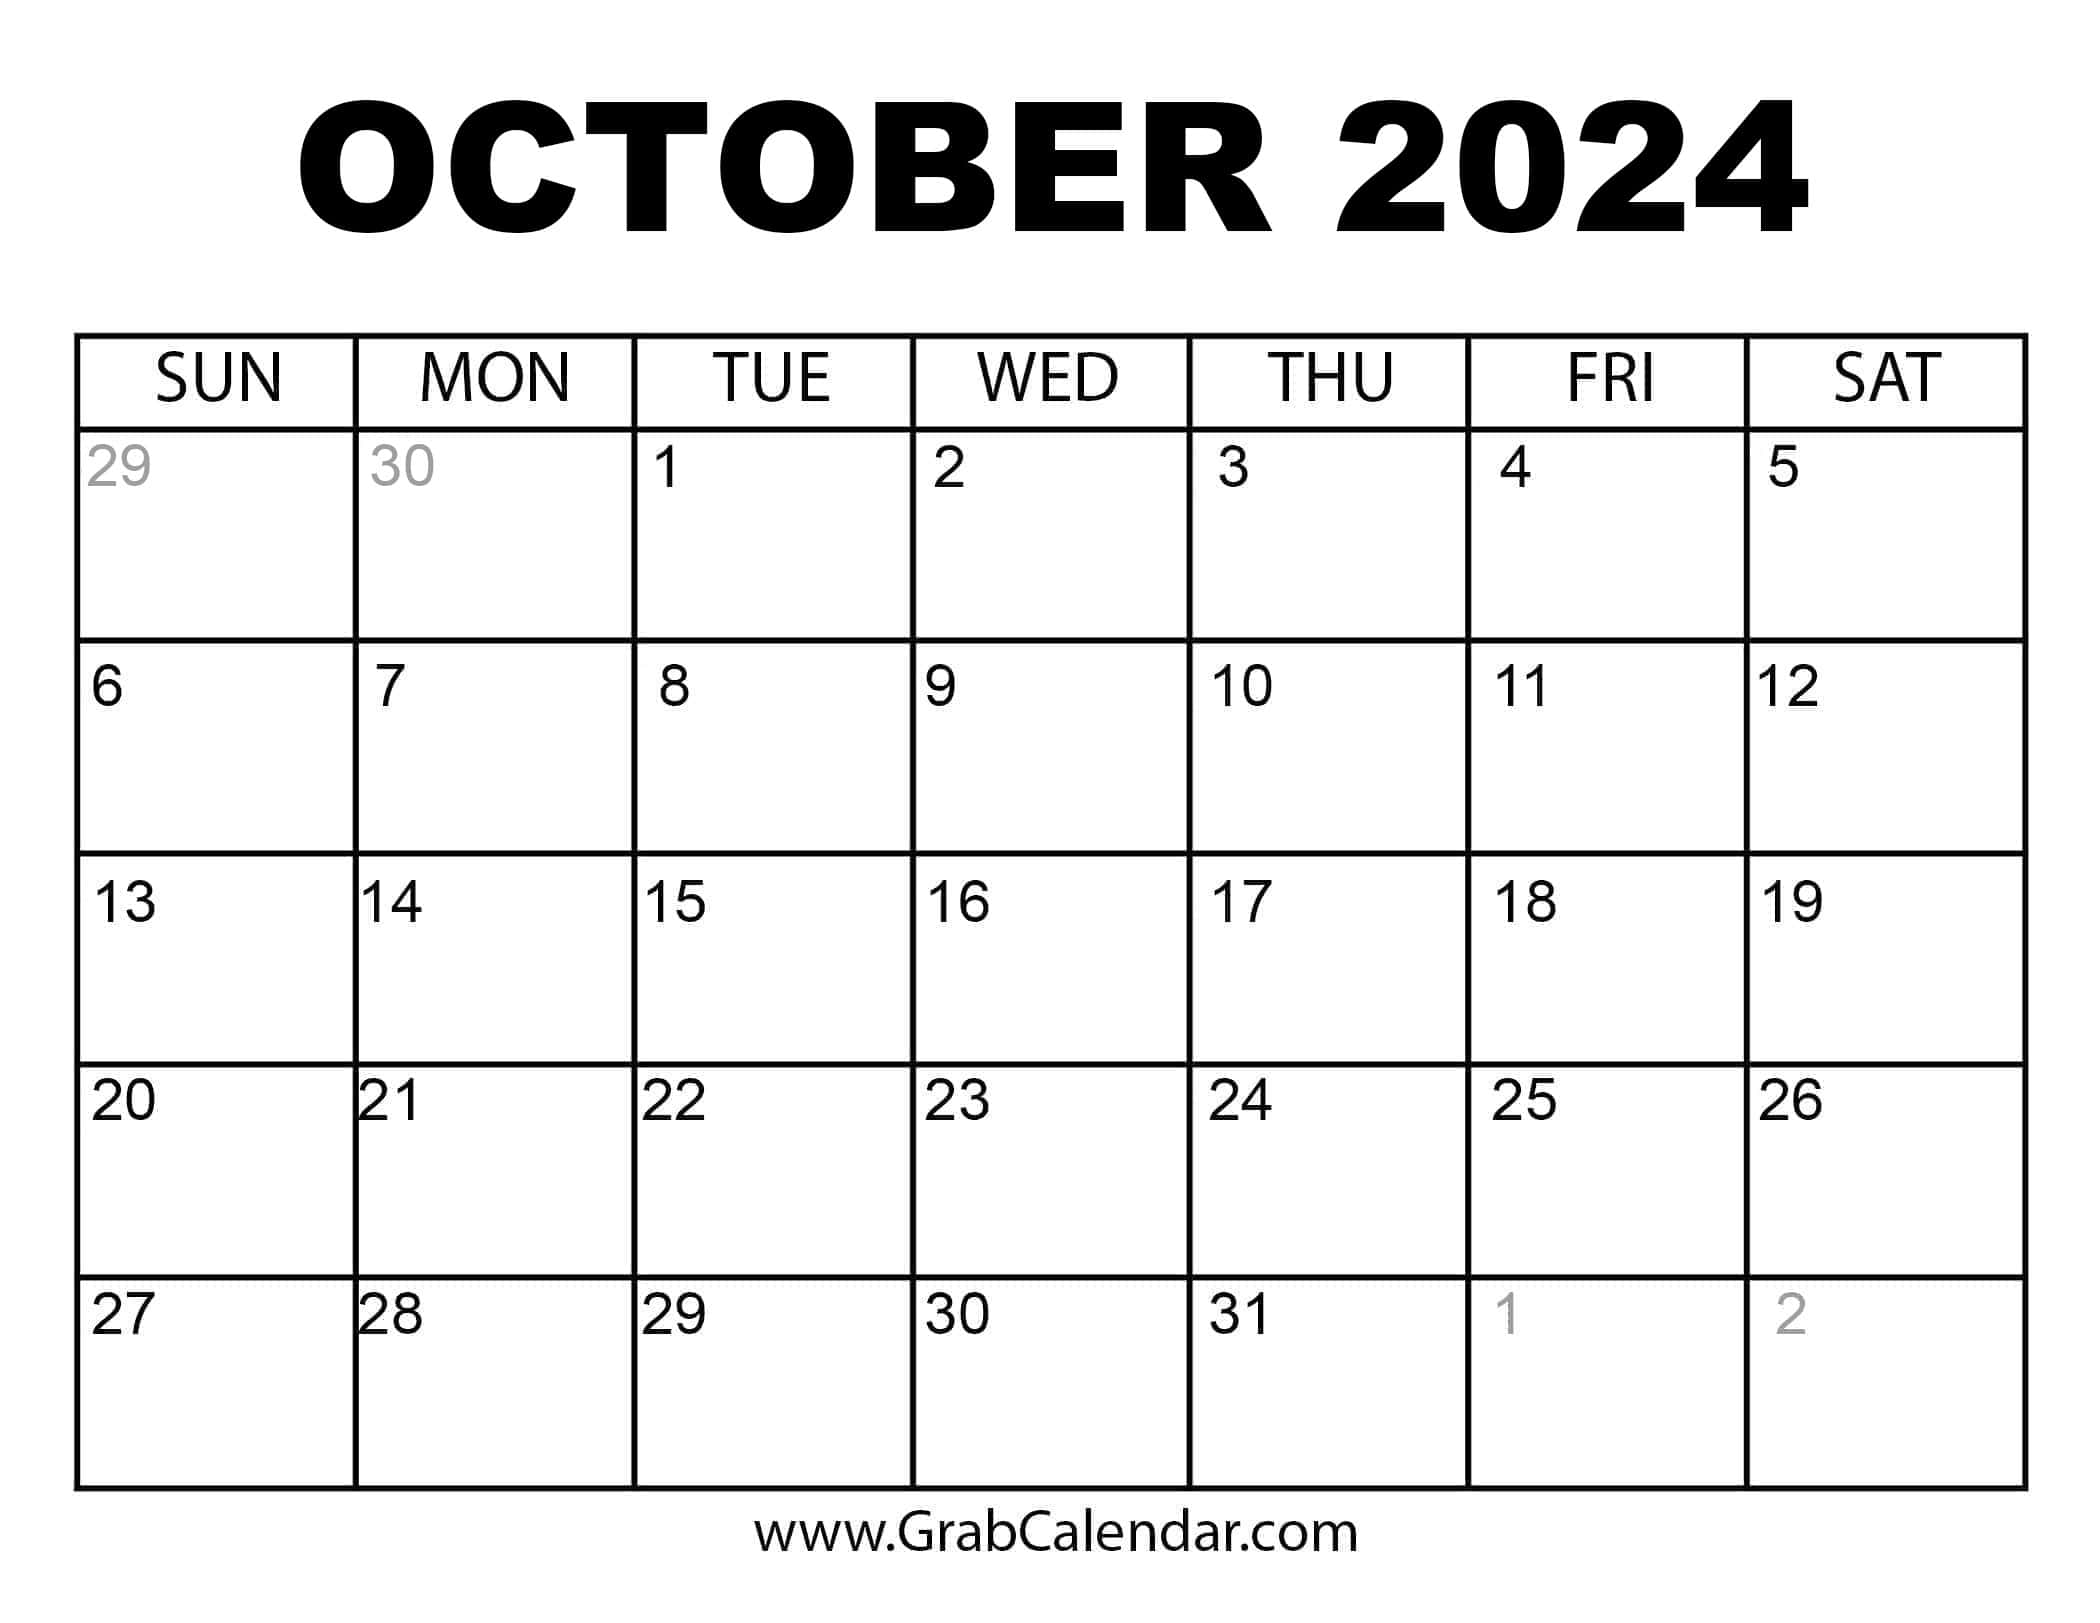 Oct 2024 Calendar Addi Livvyy